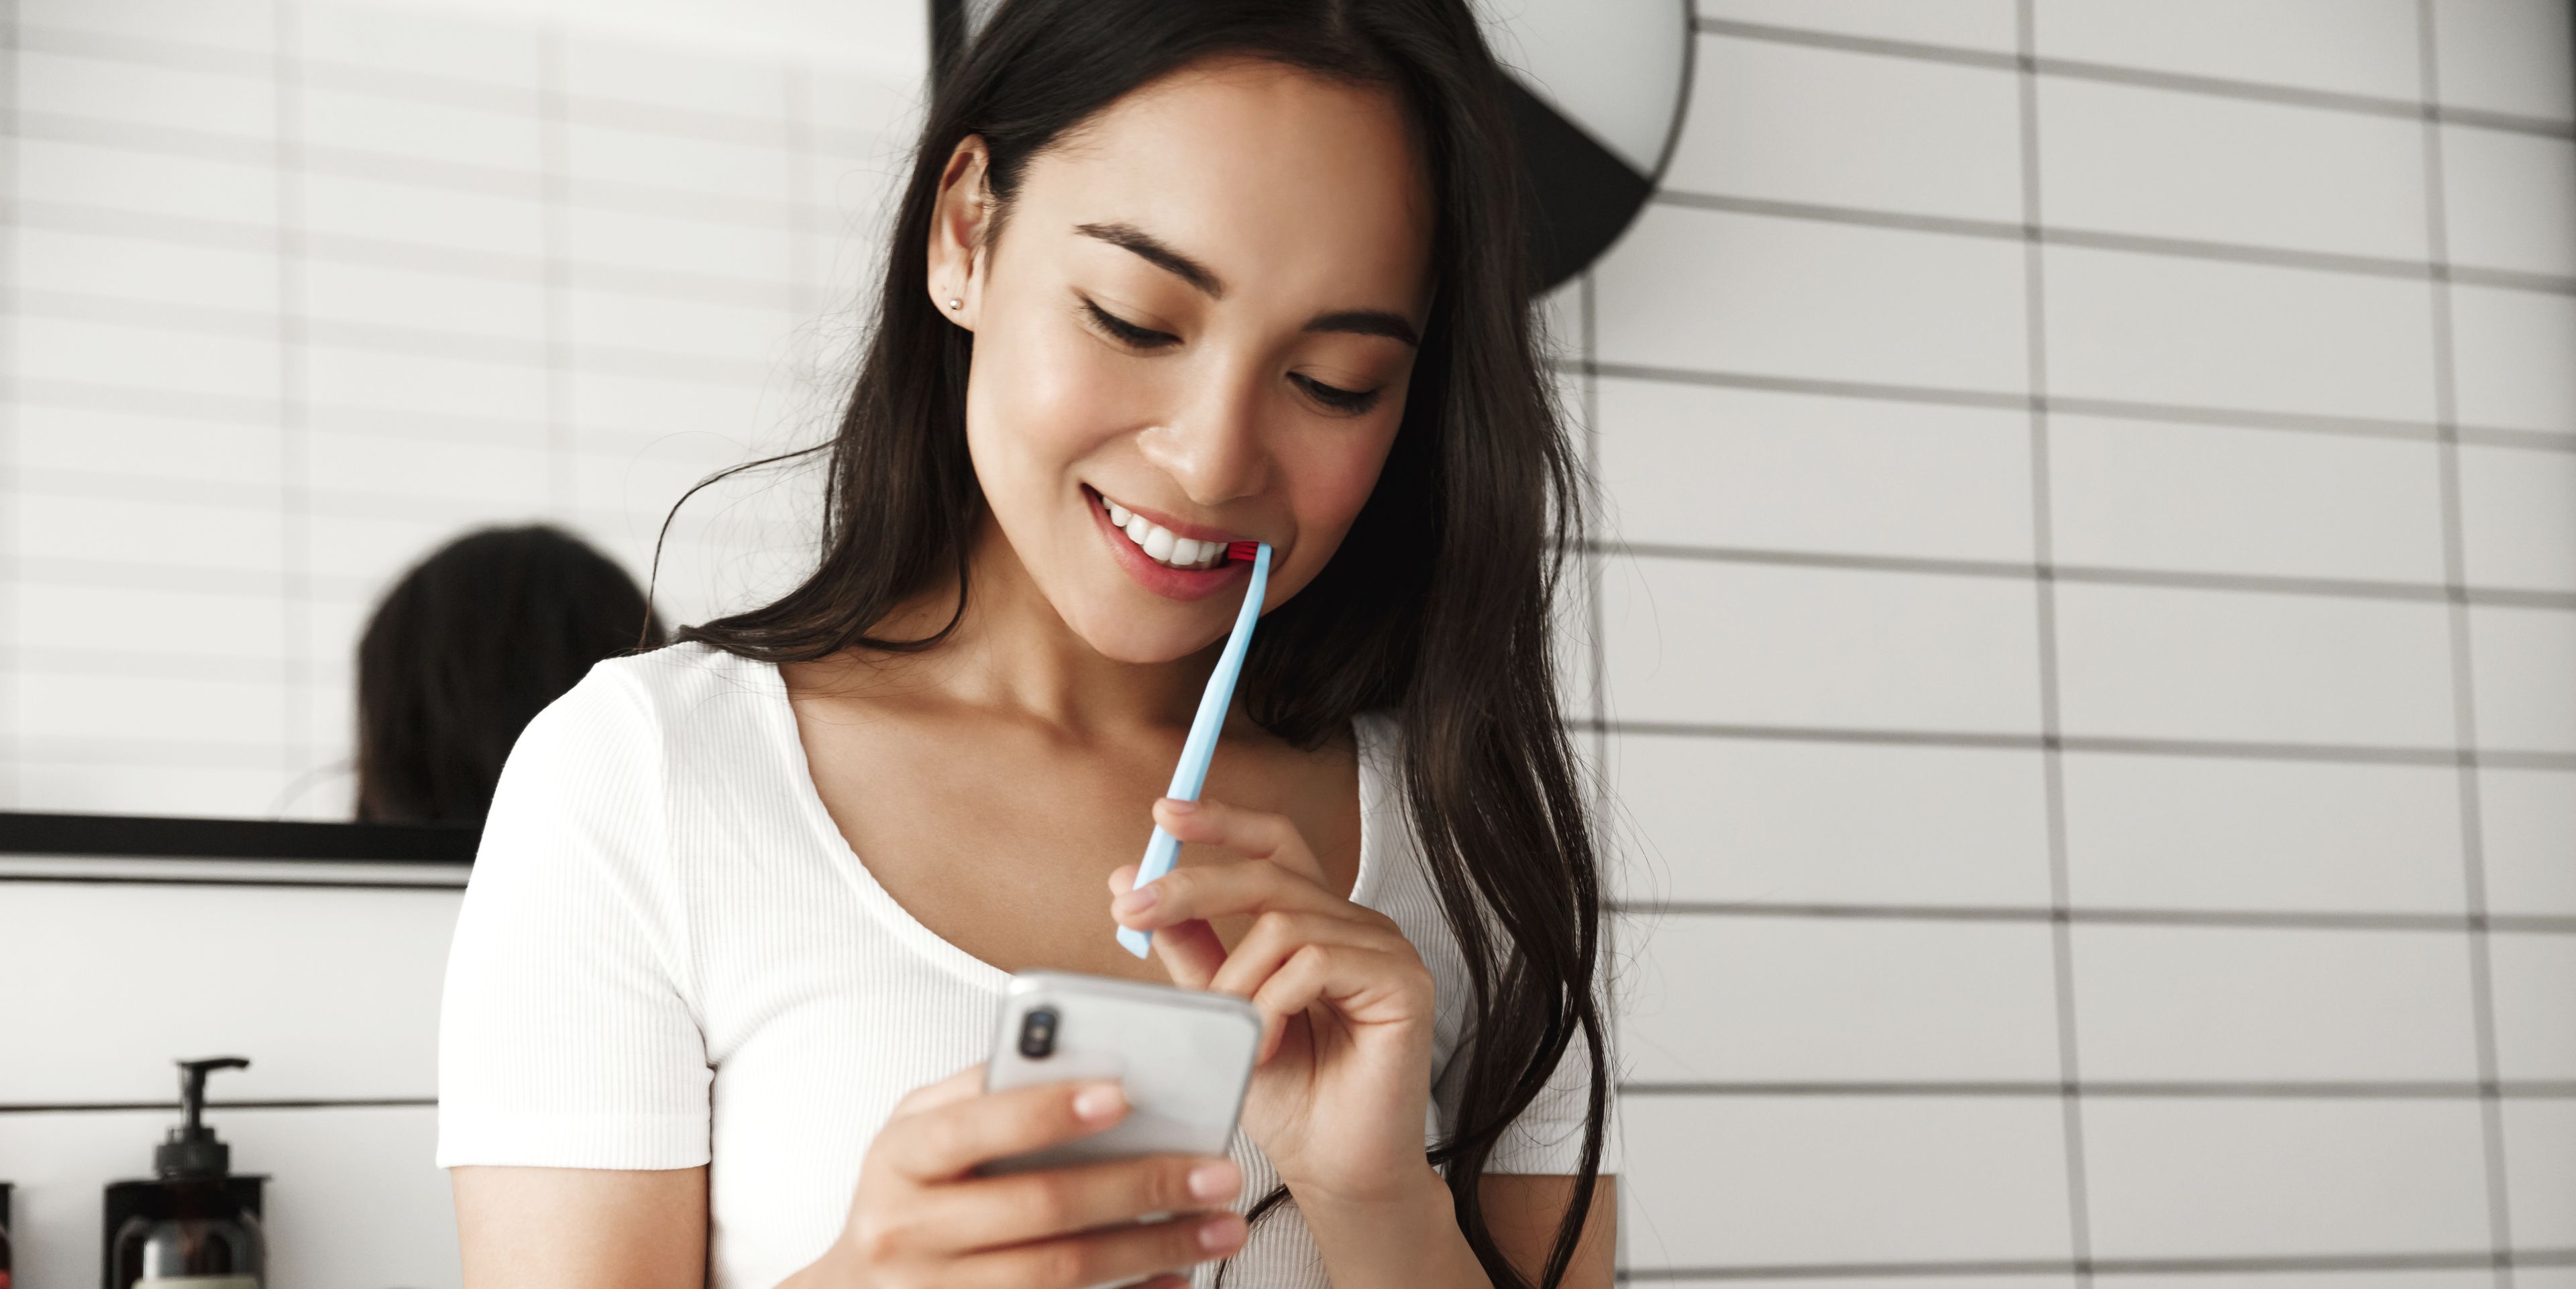 Woman looking at phone while brushing teeth